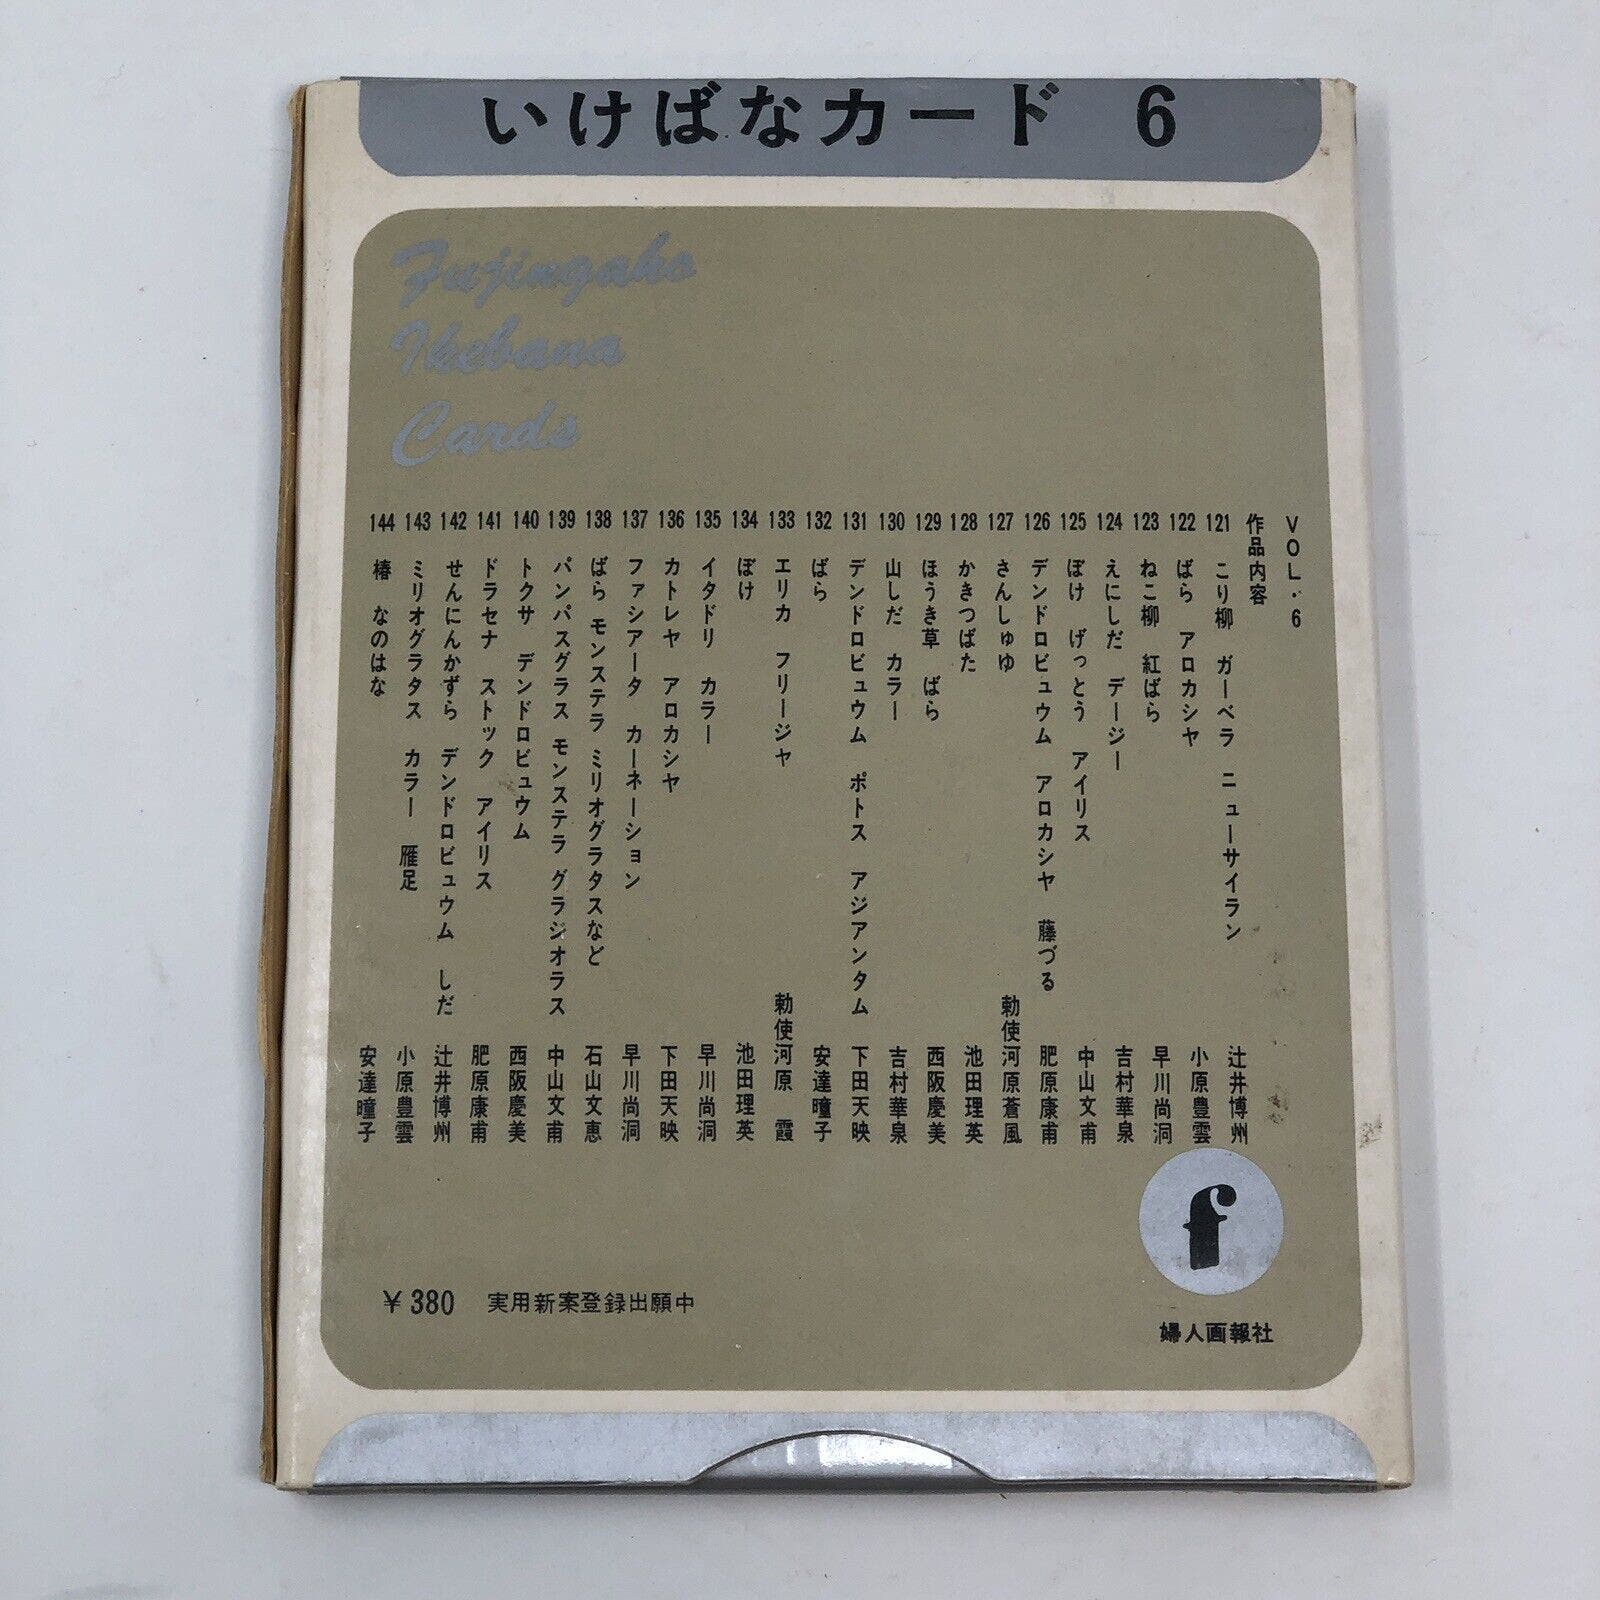 Lot 5 Vintage Fujingaho Ikebana Card Books in Japanese - Uncle Buddy's Beard & Used Books